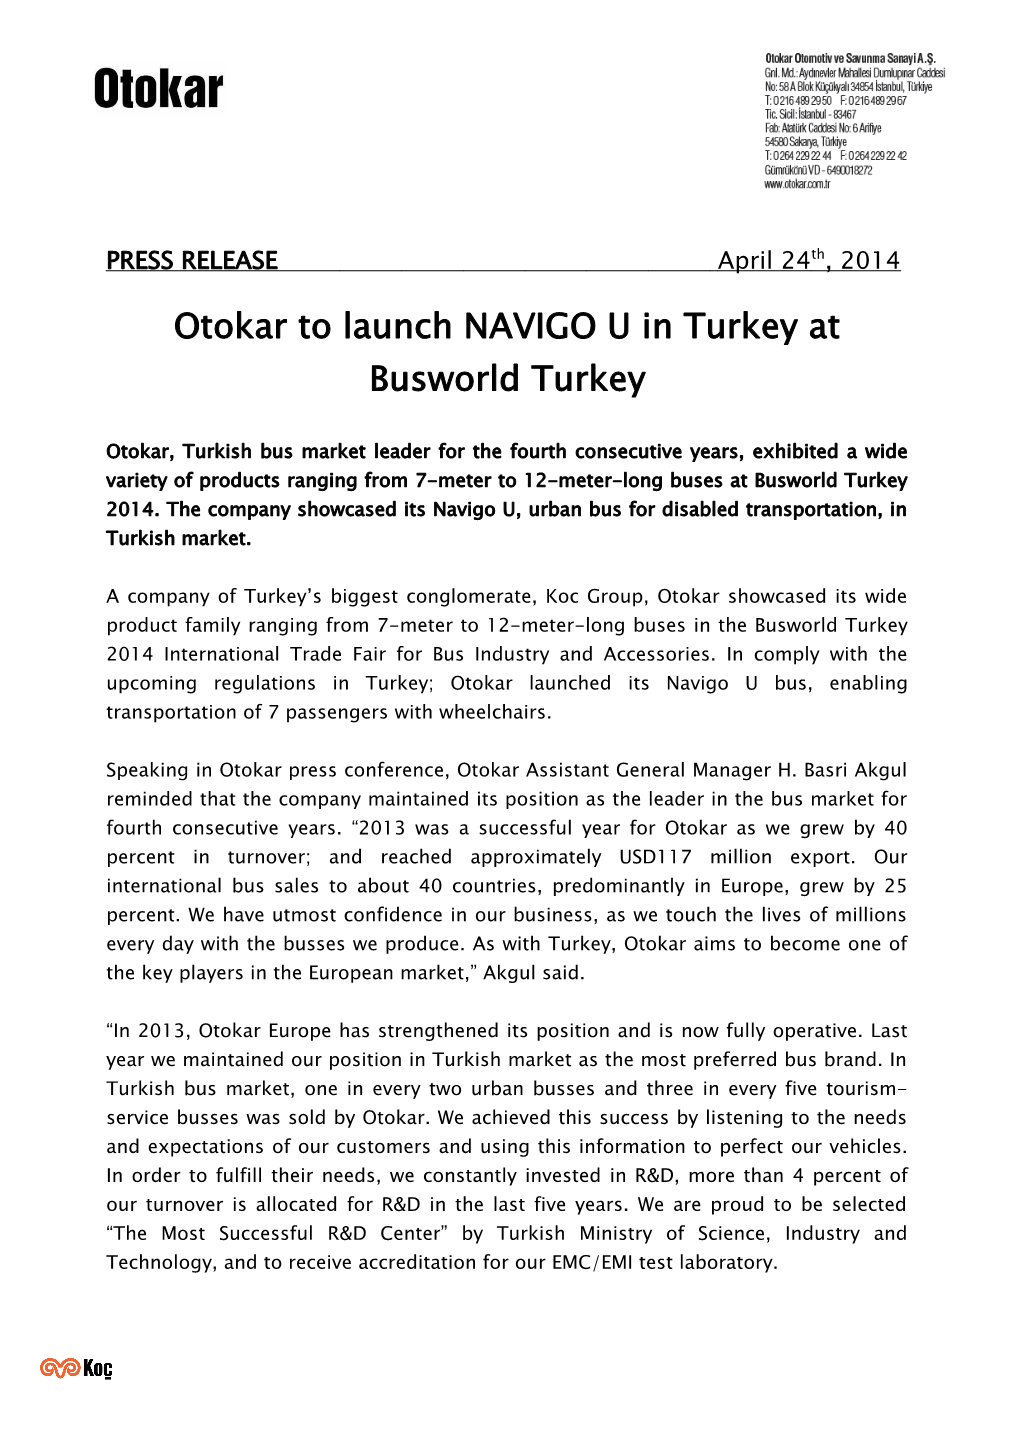 Otokar to Launch NAVIGO U in Turkey at Busworld Turkey